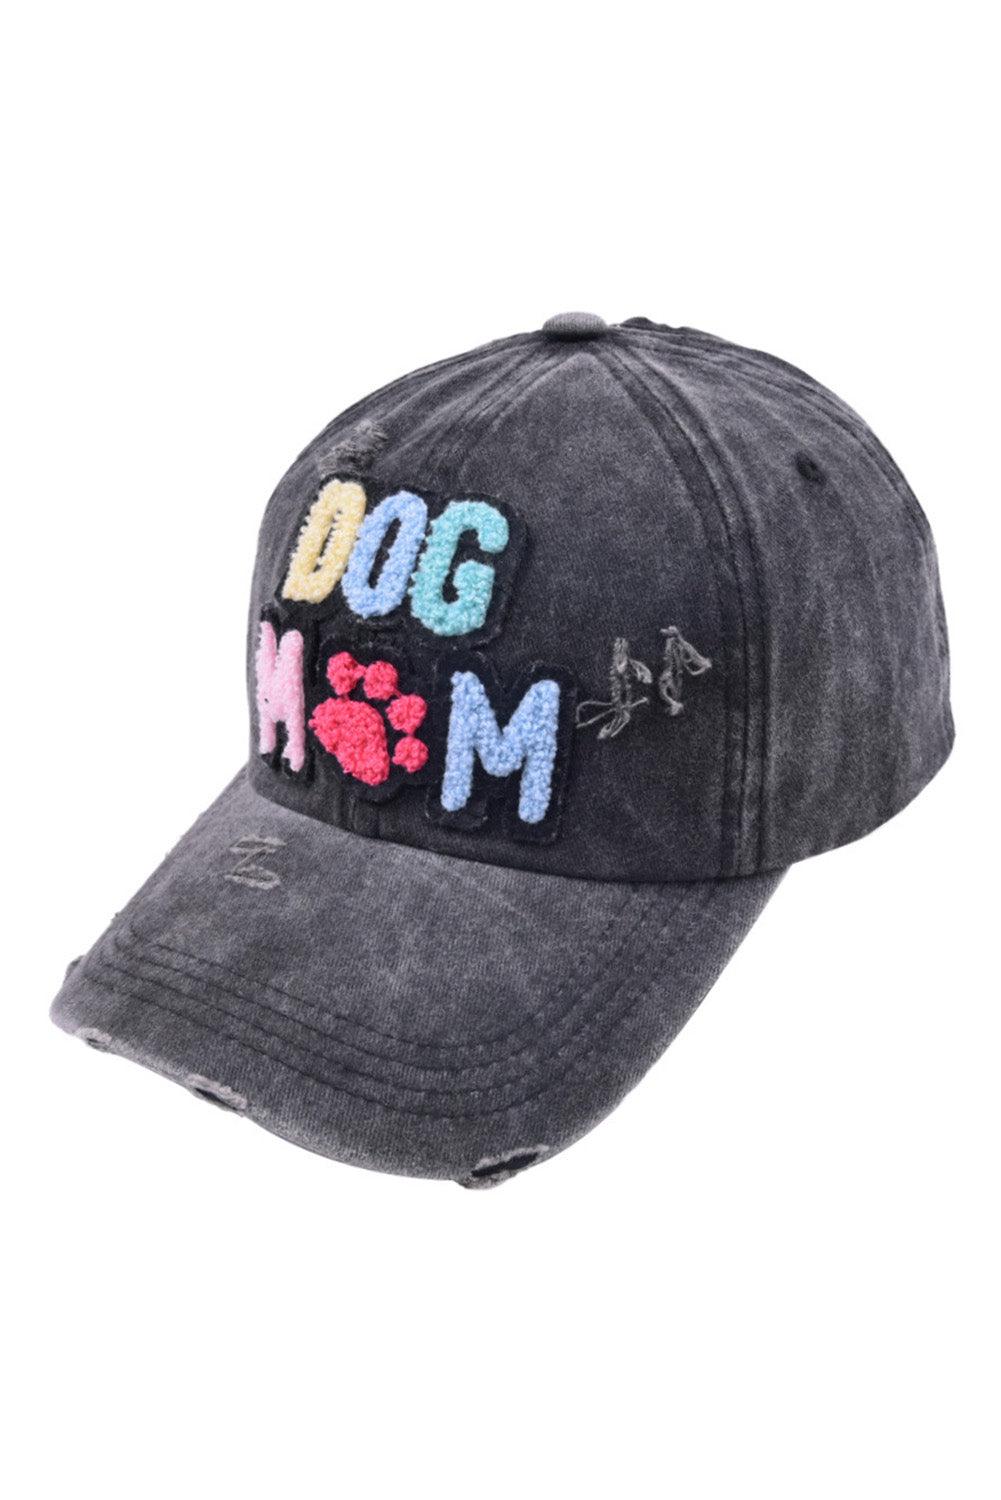 Black "Dog Mom" Distressed Denim Baseball Cap - God's Girl Gifts And Apparel